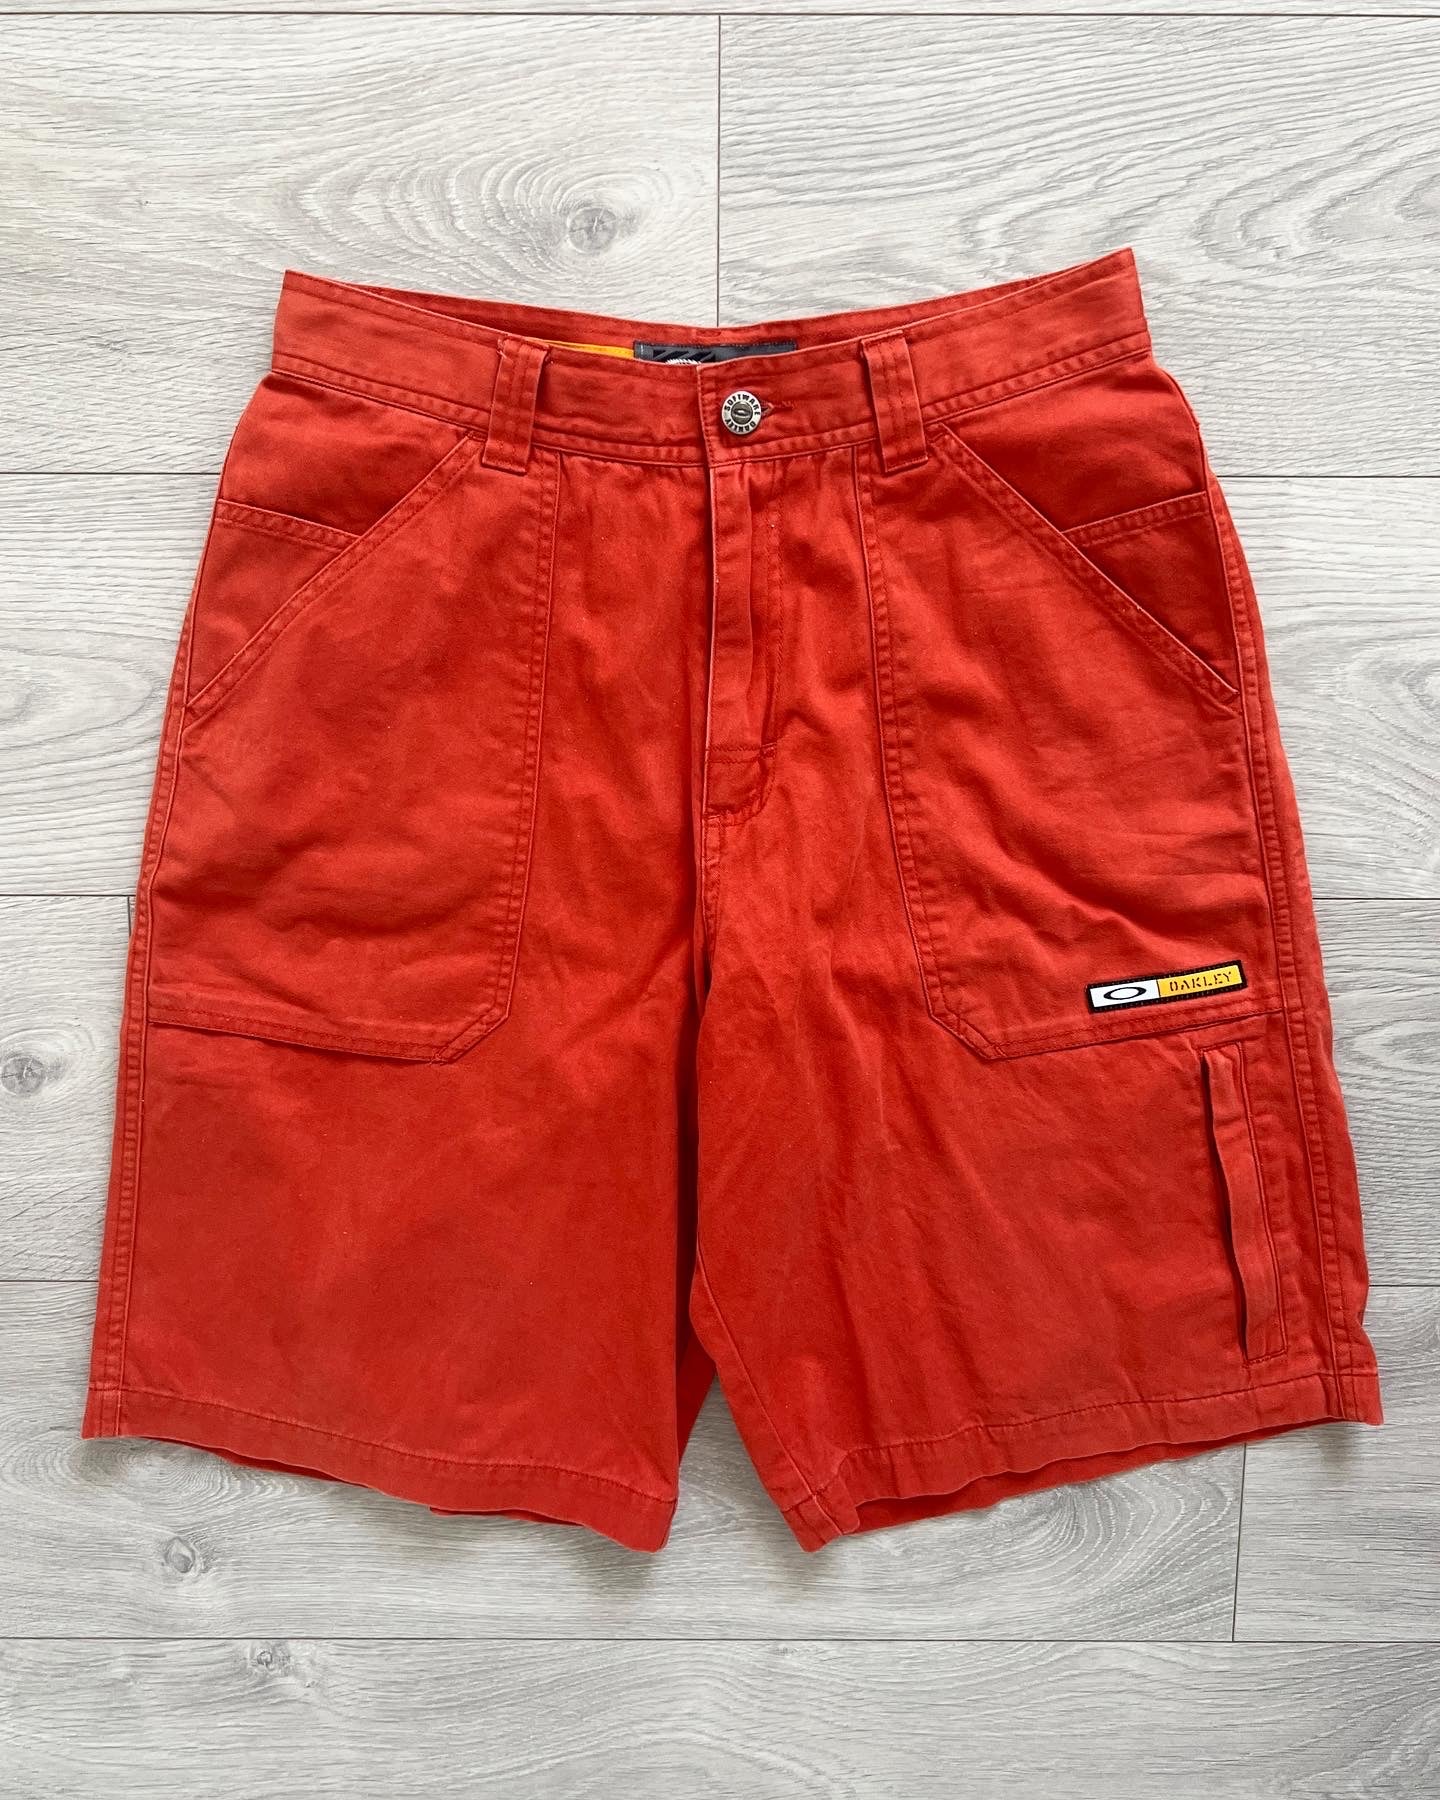 Oakley 2000s 8-Pocket Technical Rust Orange Shorts - Size 30